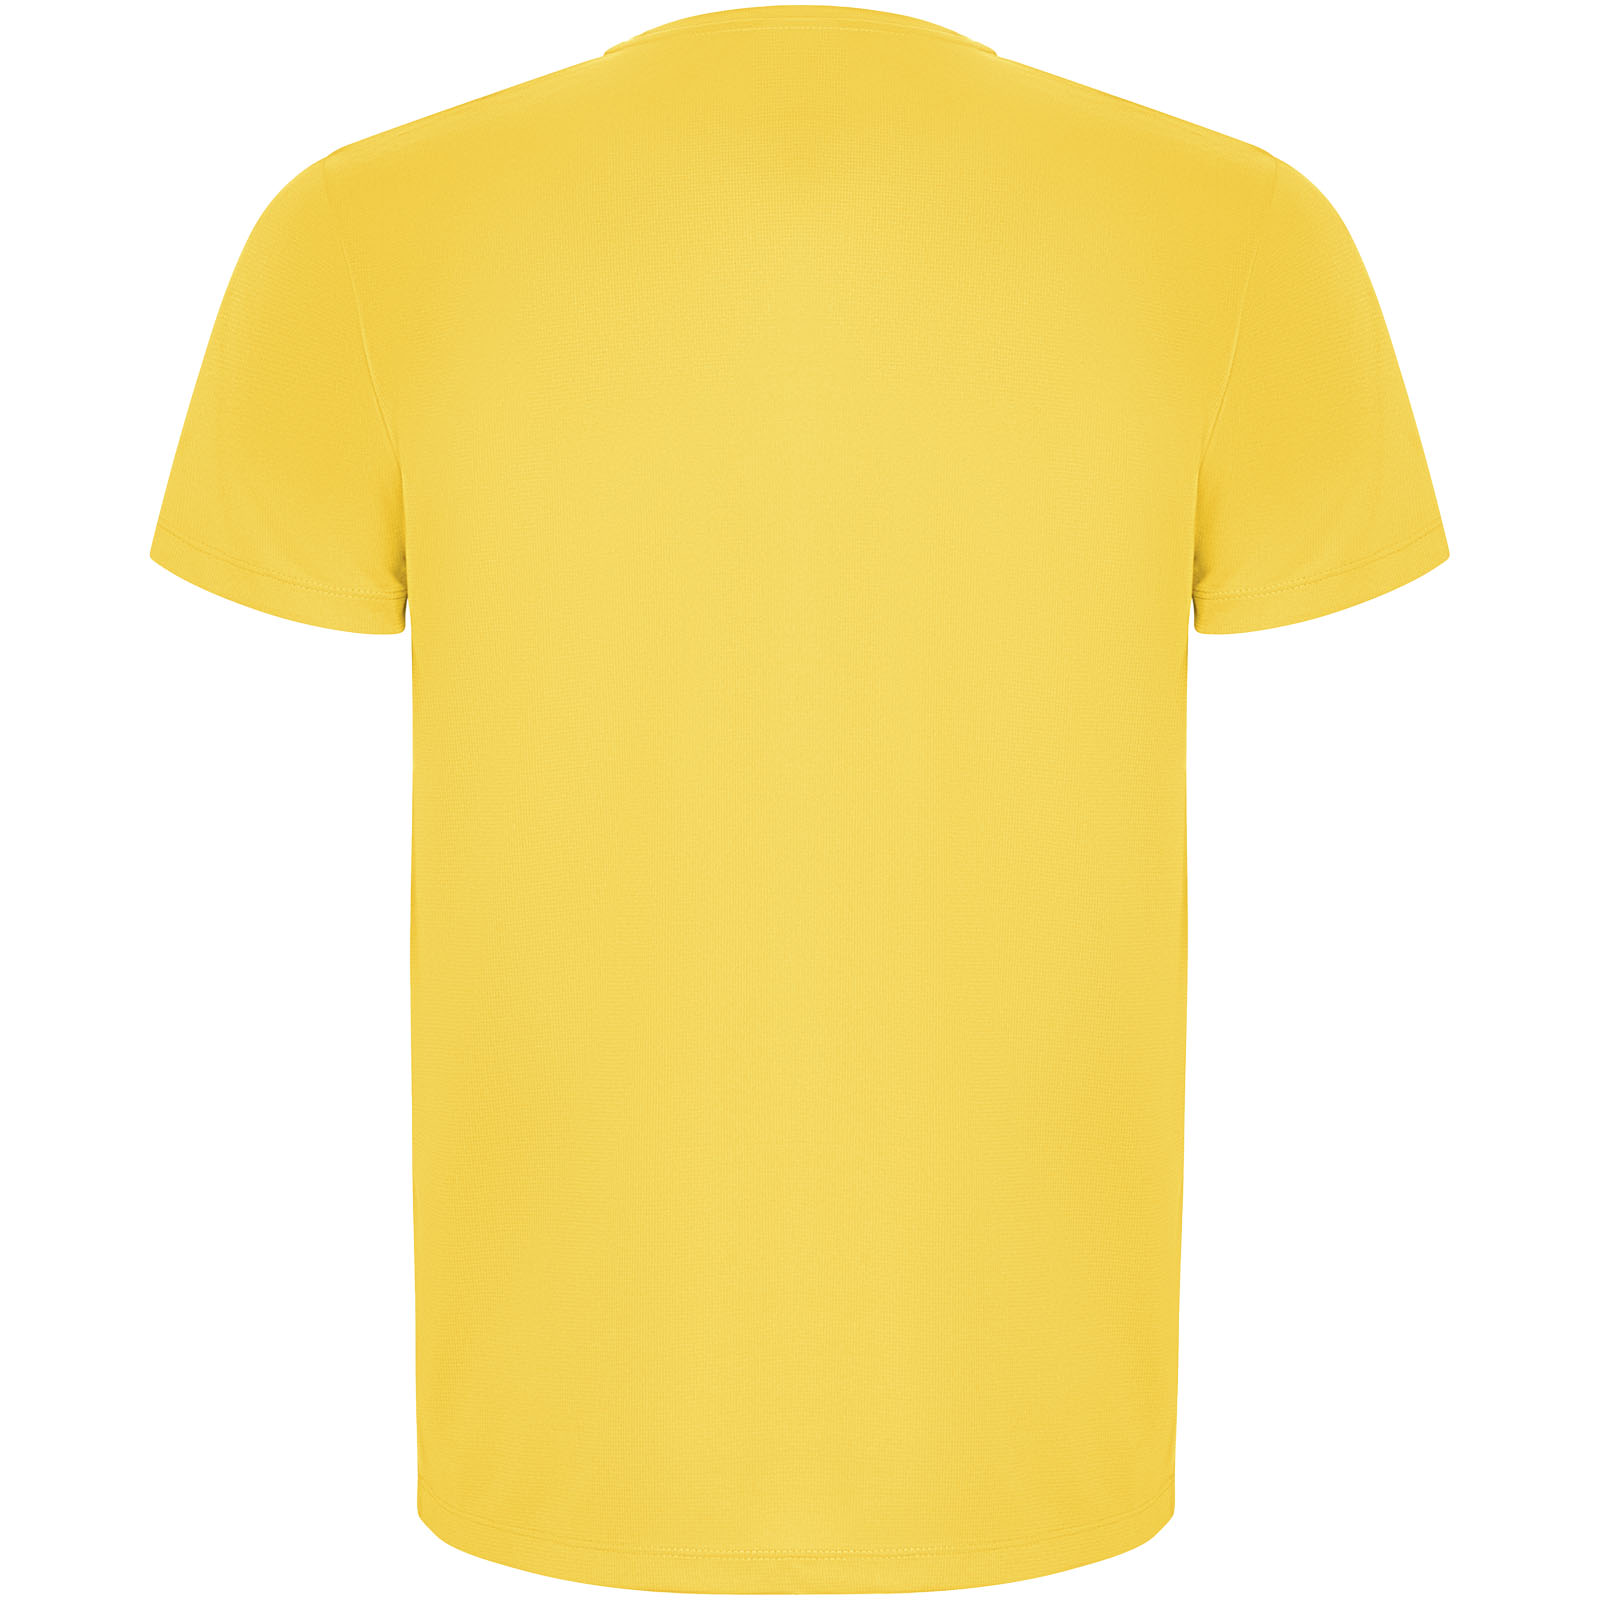 Advertising T-shirts - Imola short sleeve men's sports t-shirt - 1